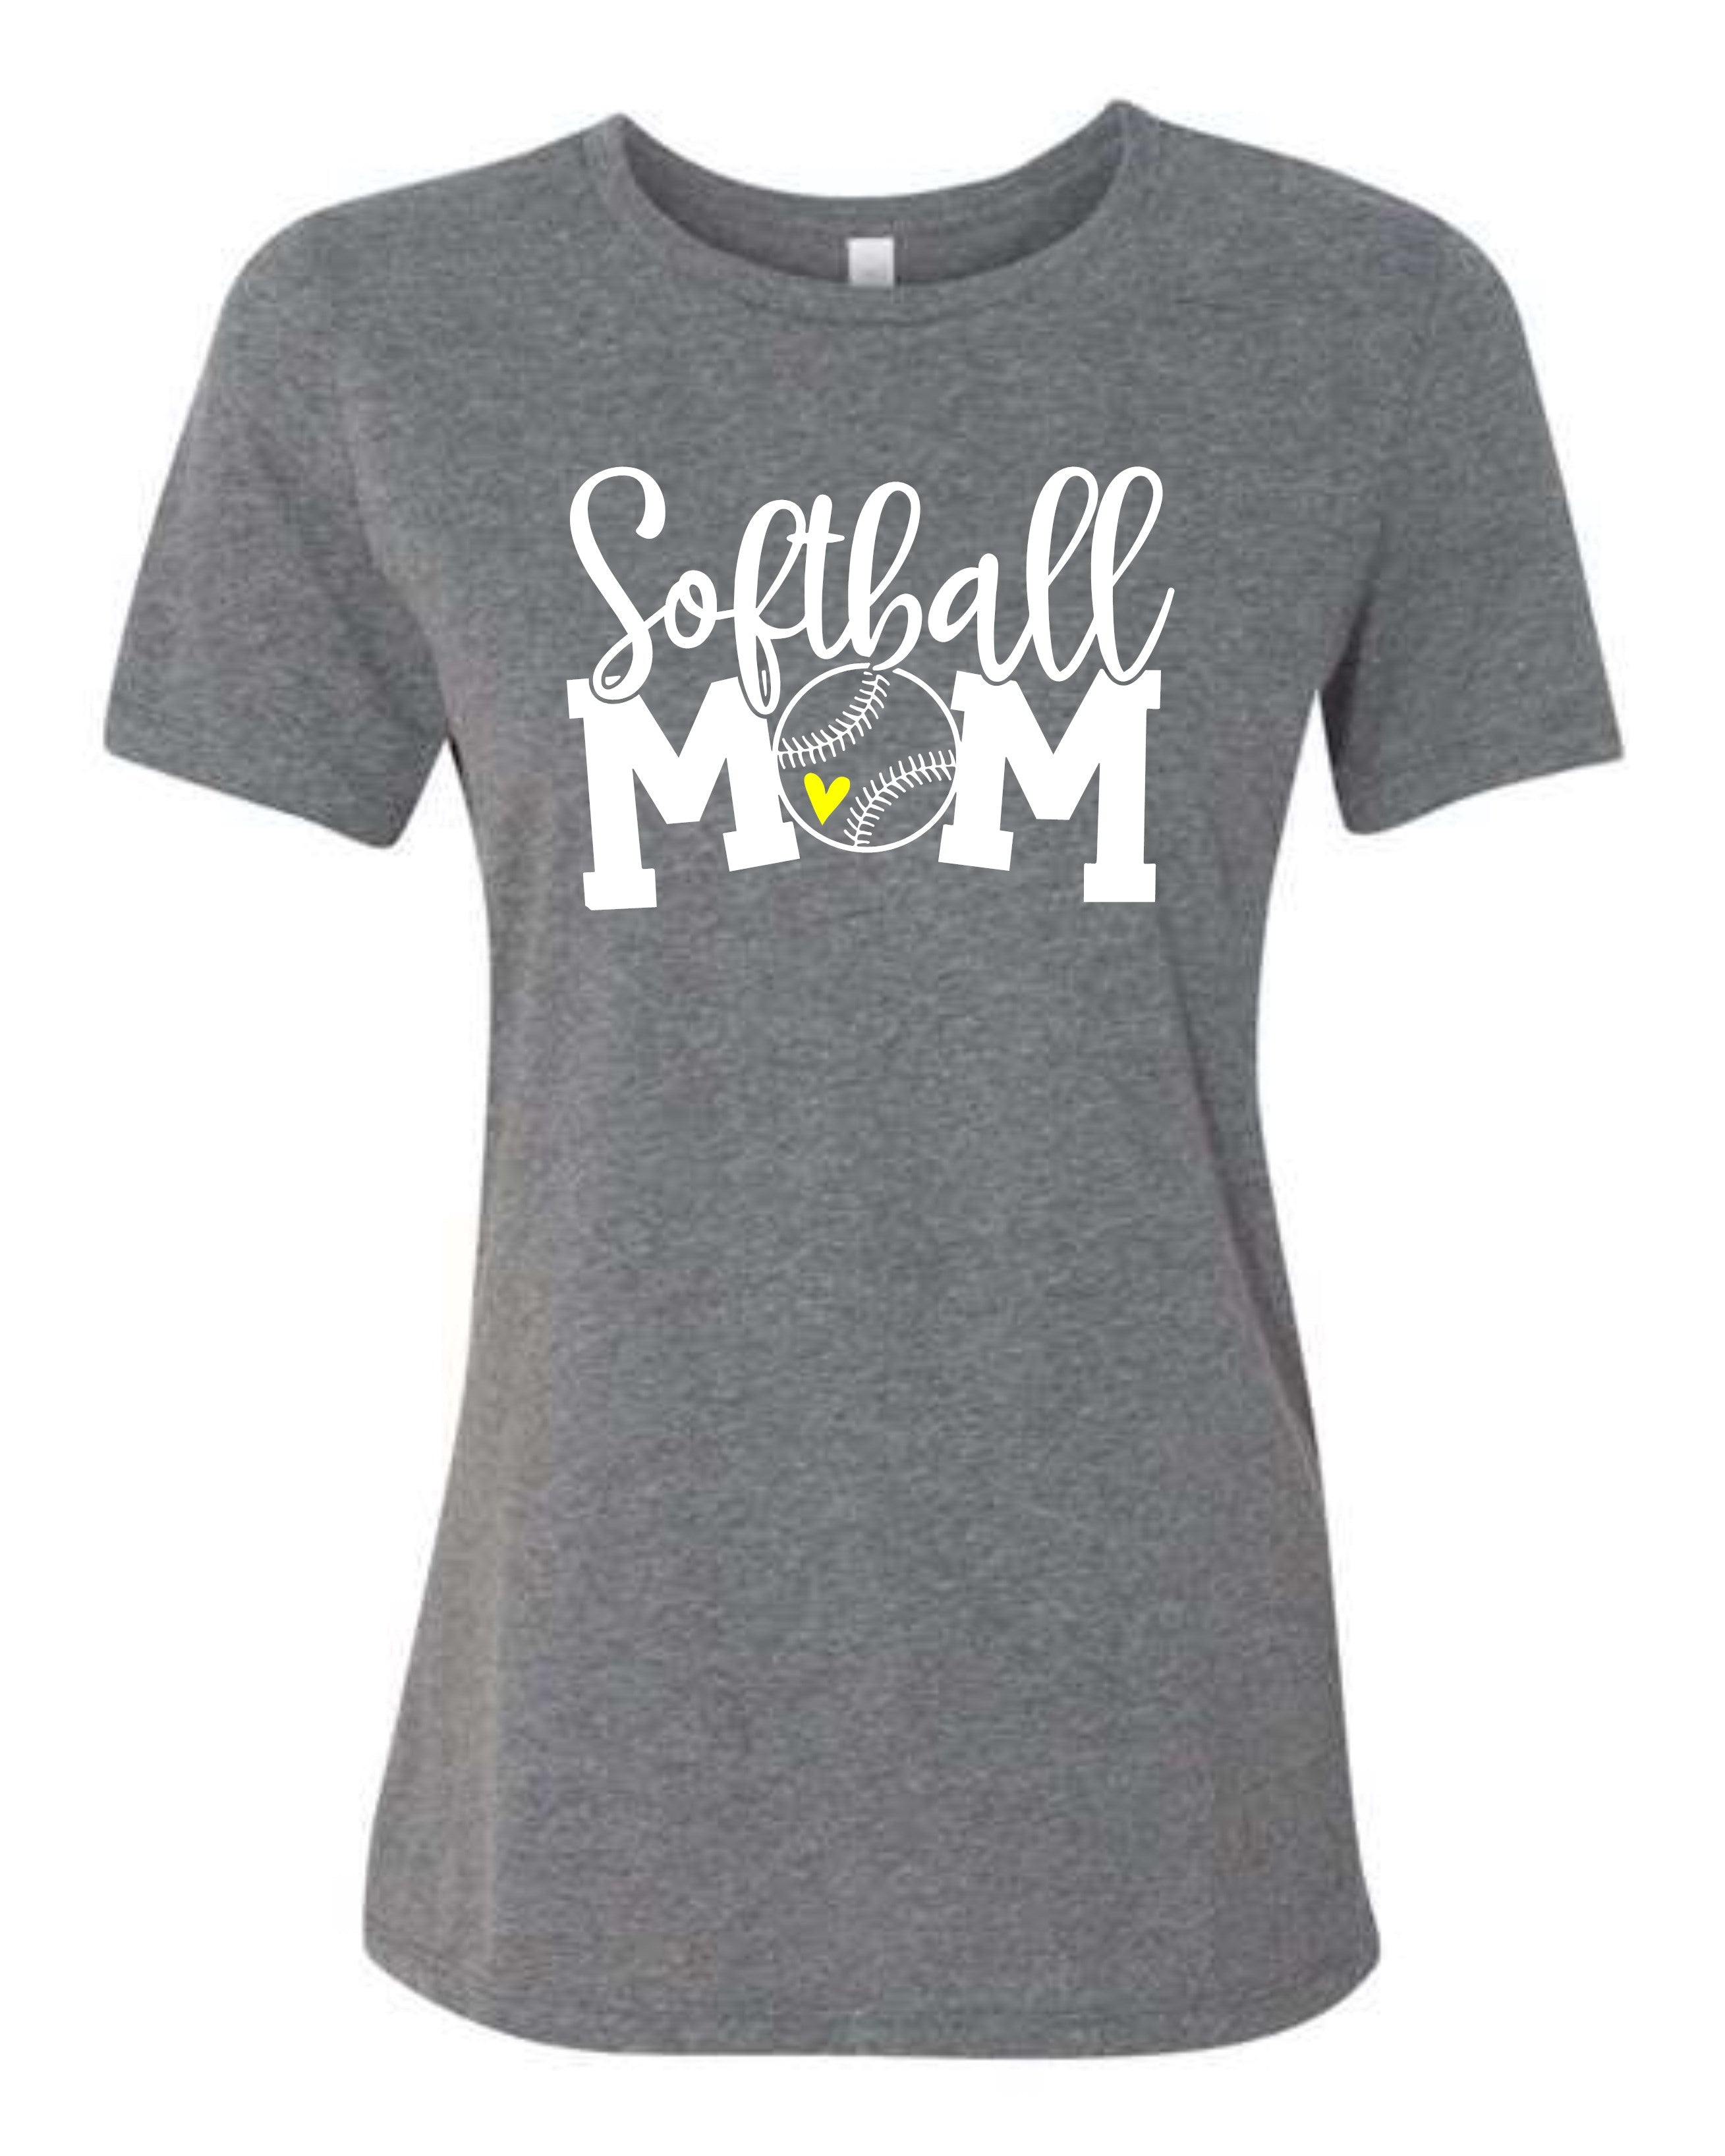 Softball Mom - WOMEN'S CUT